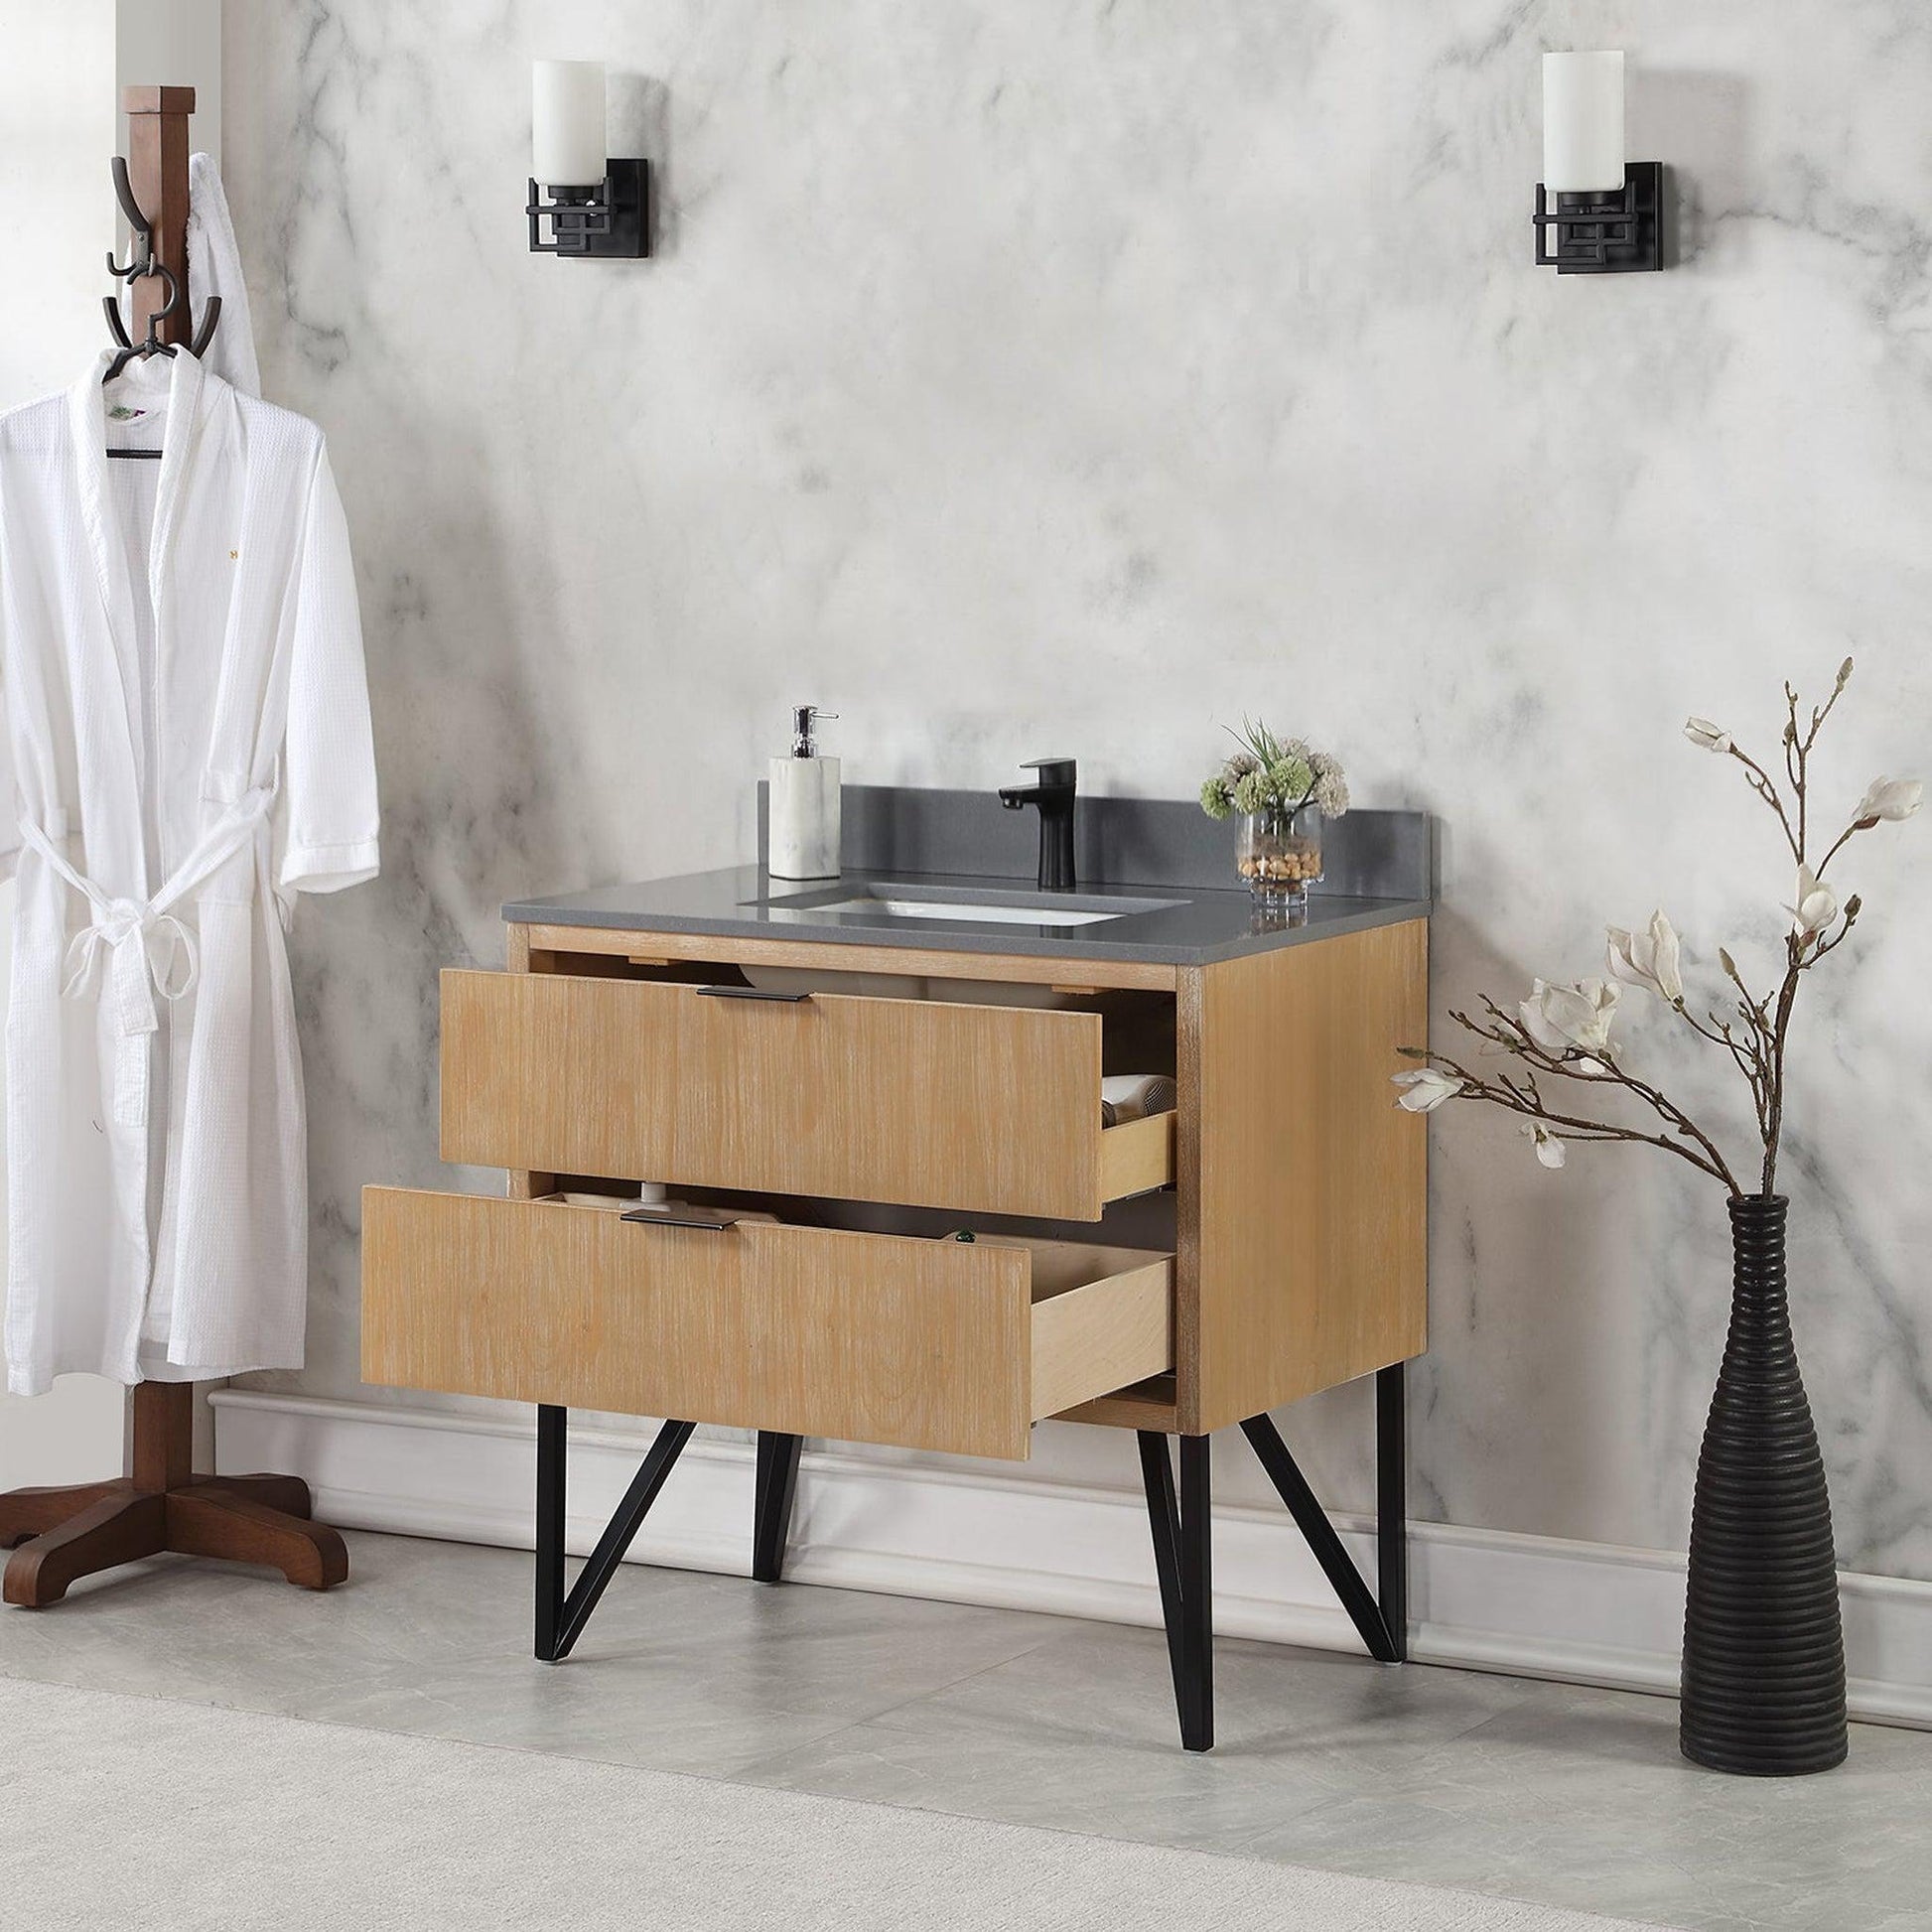 Altair Helios 36" Weathered Pine Freestanding Single Bathroom Vanity Set With Concrete Gray Composite Stone Top, Single Rectangular Undermount Ceramic Sink, Overflow, and Backsplash